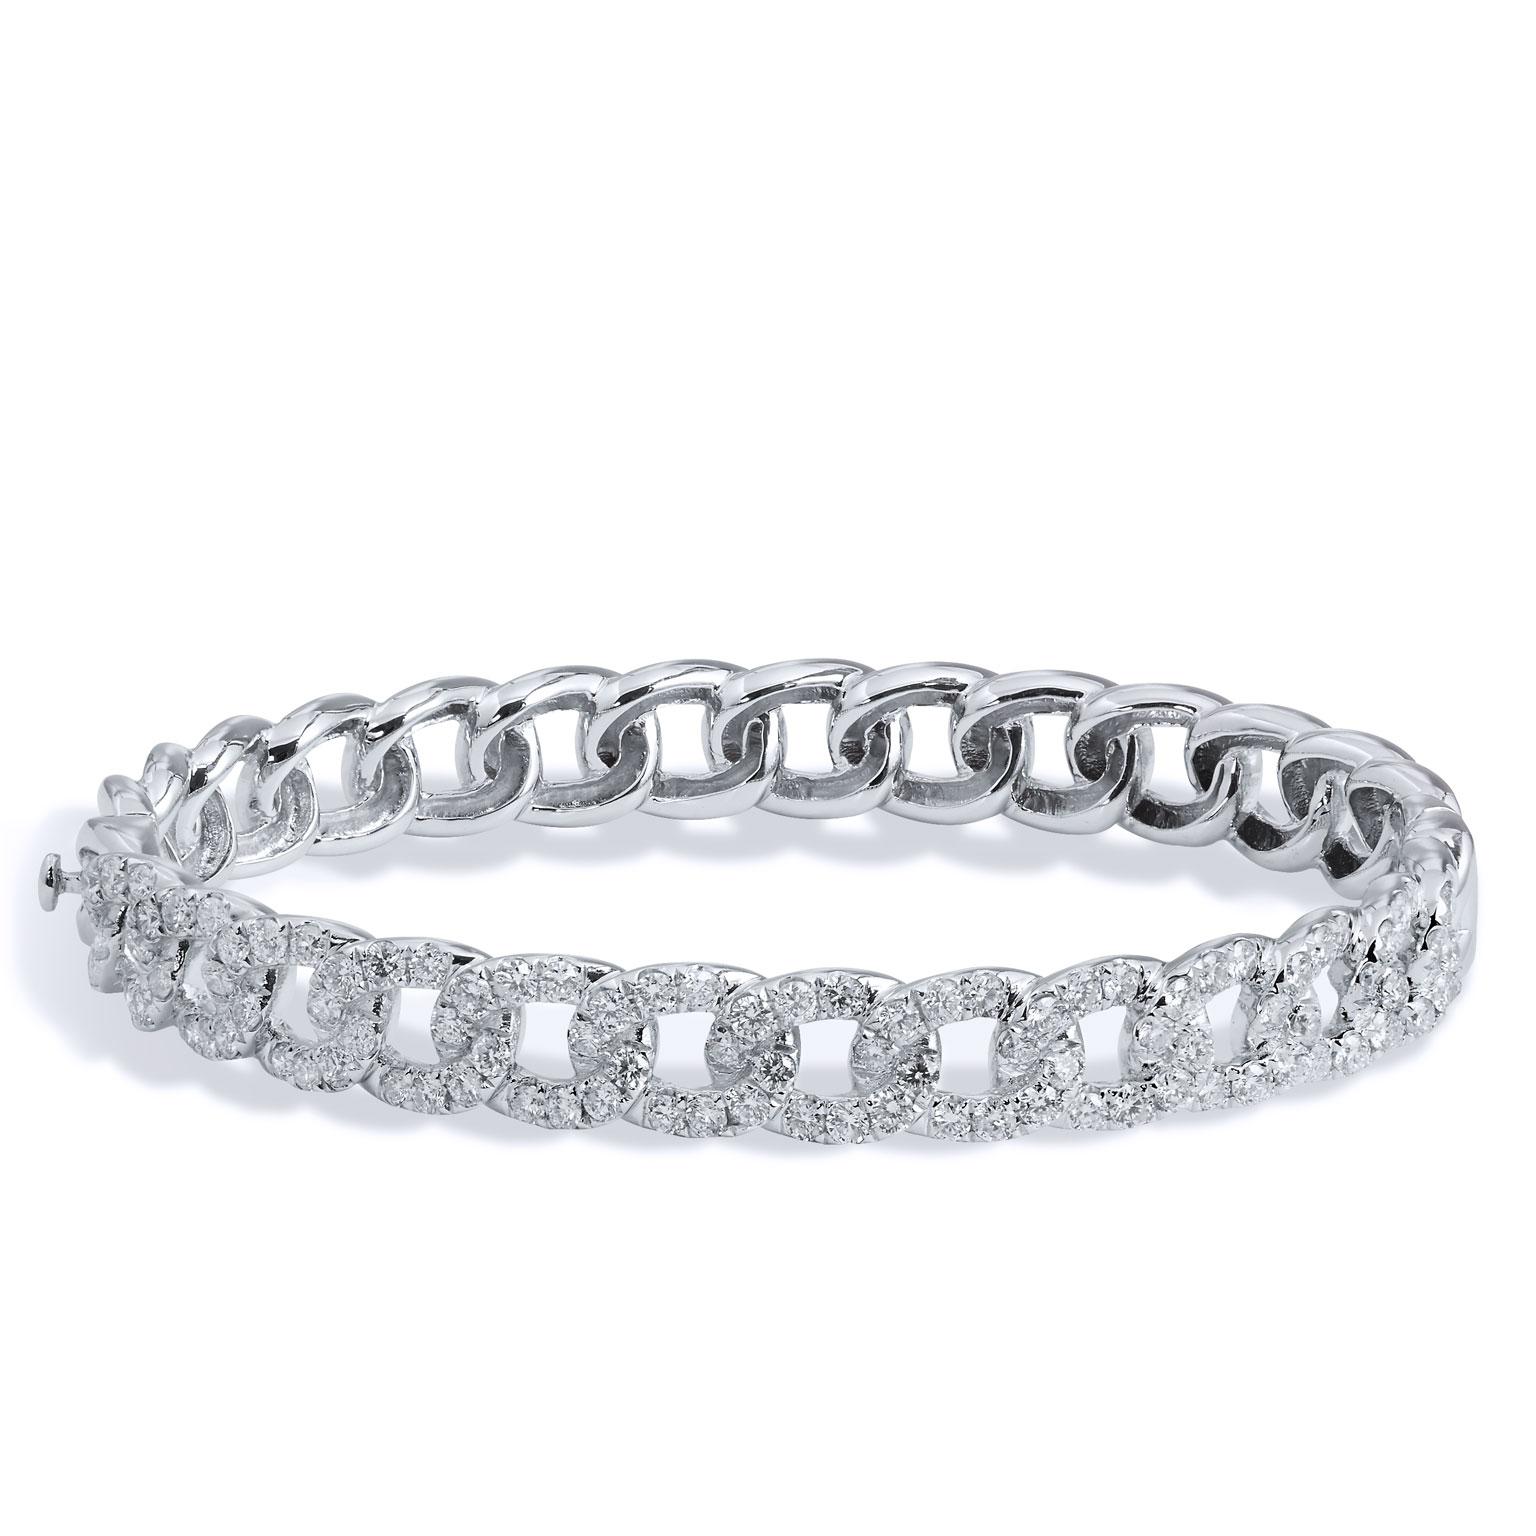 Women's 2.79 carat Pave Diamond Chain Link Hinge Lock Bangle Bracelet in 18 karat  For Sale